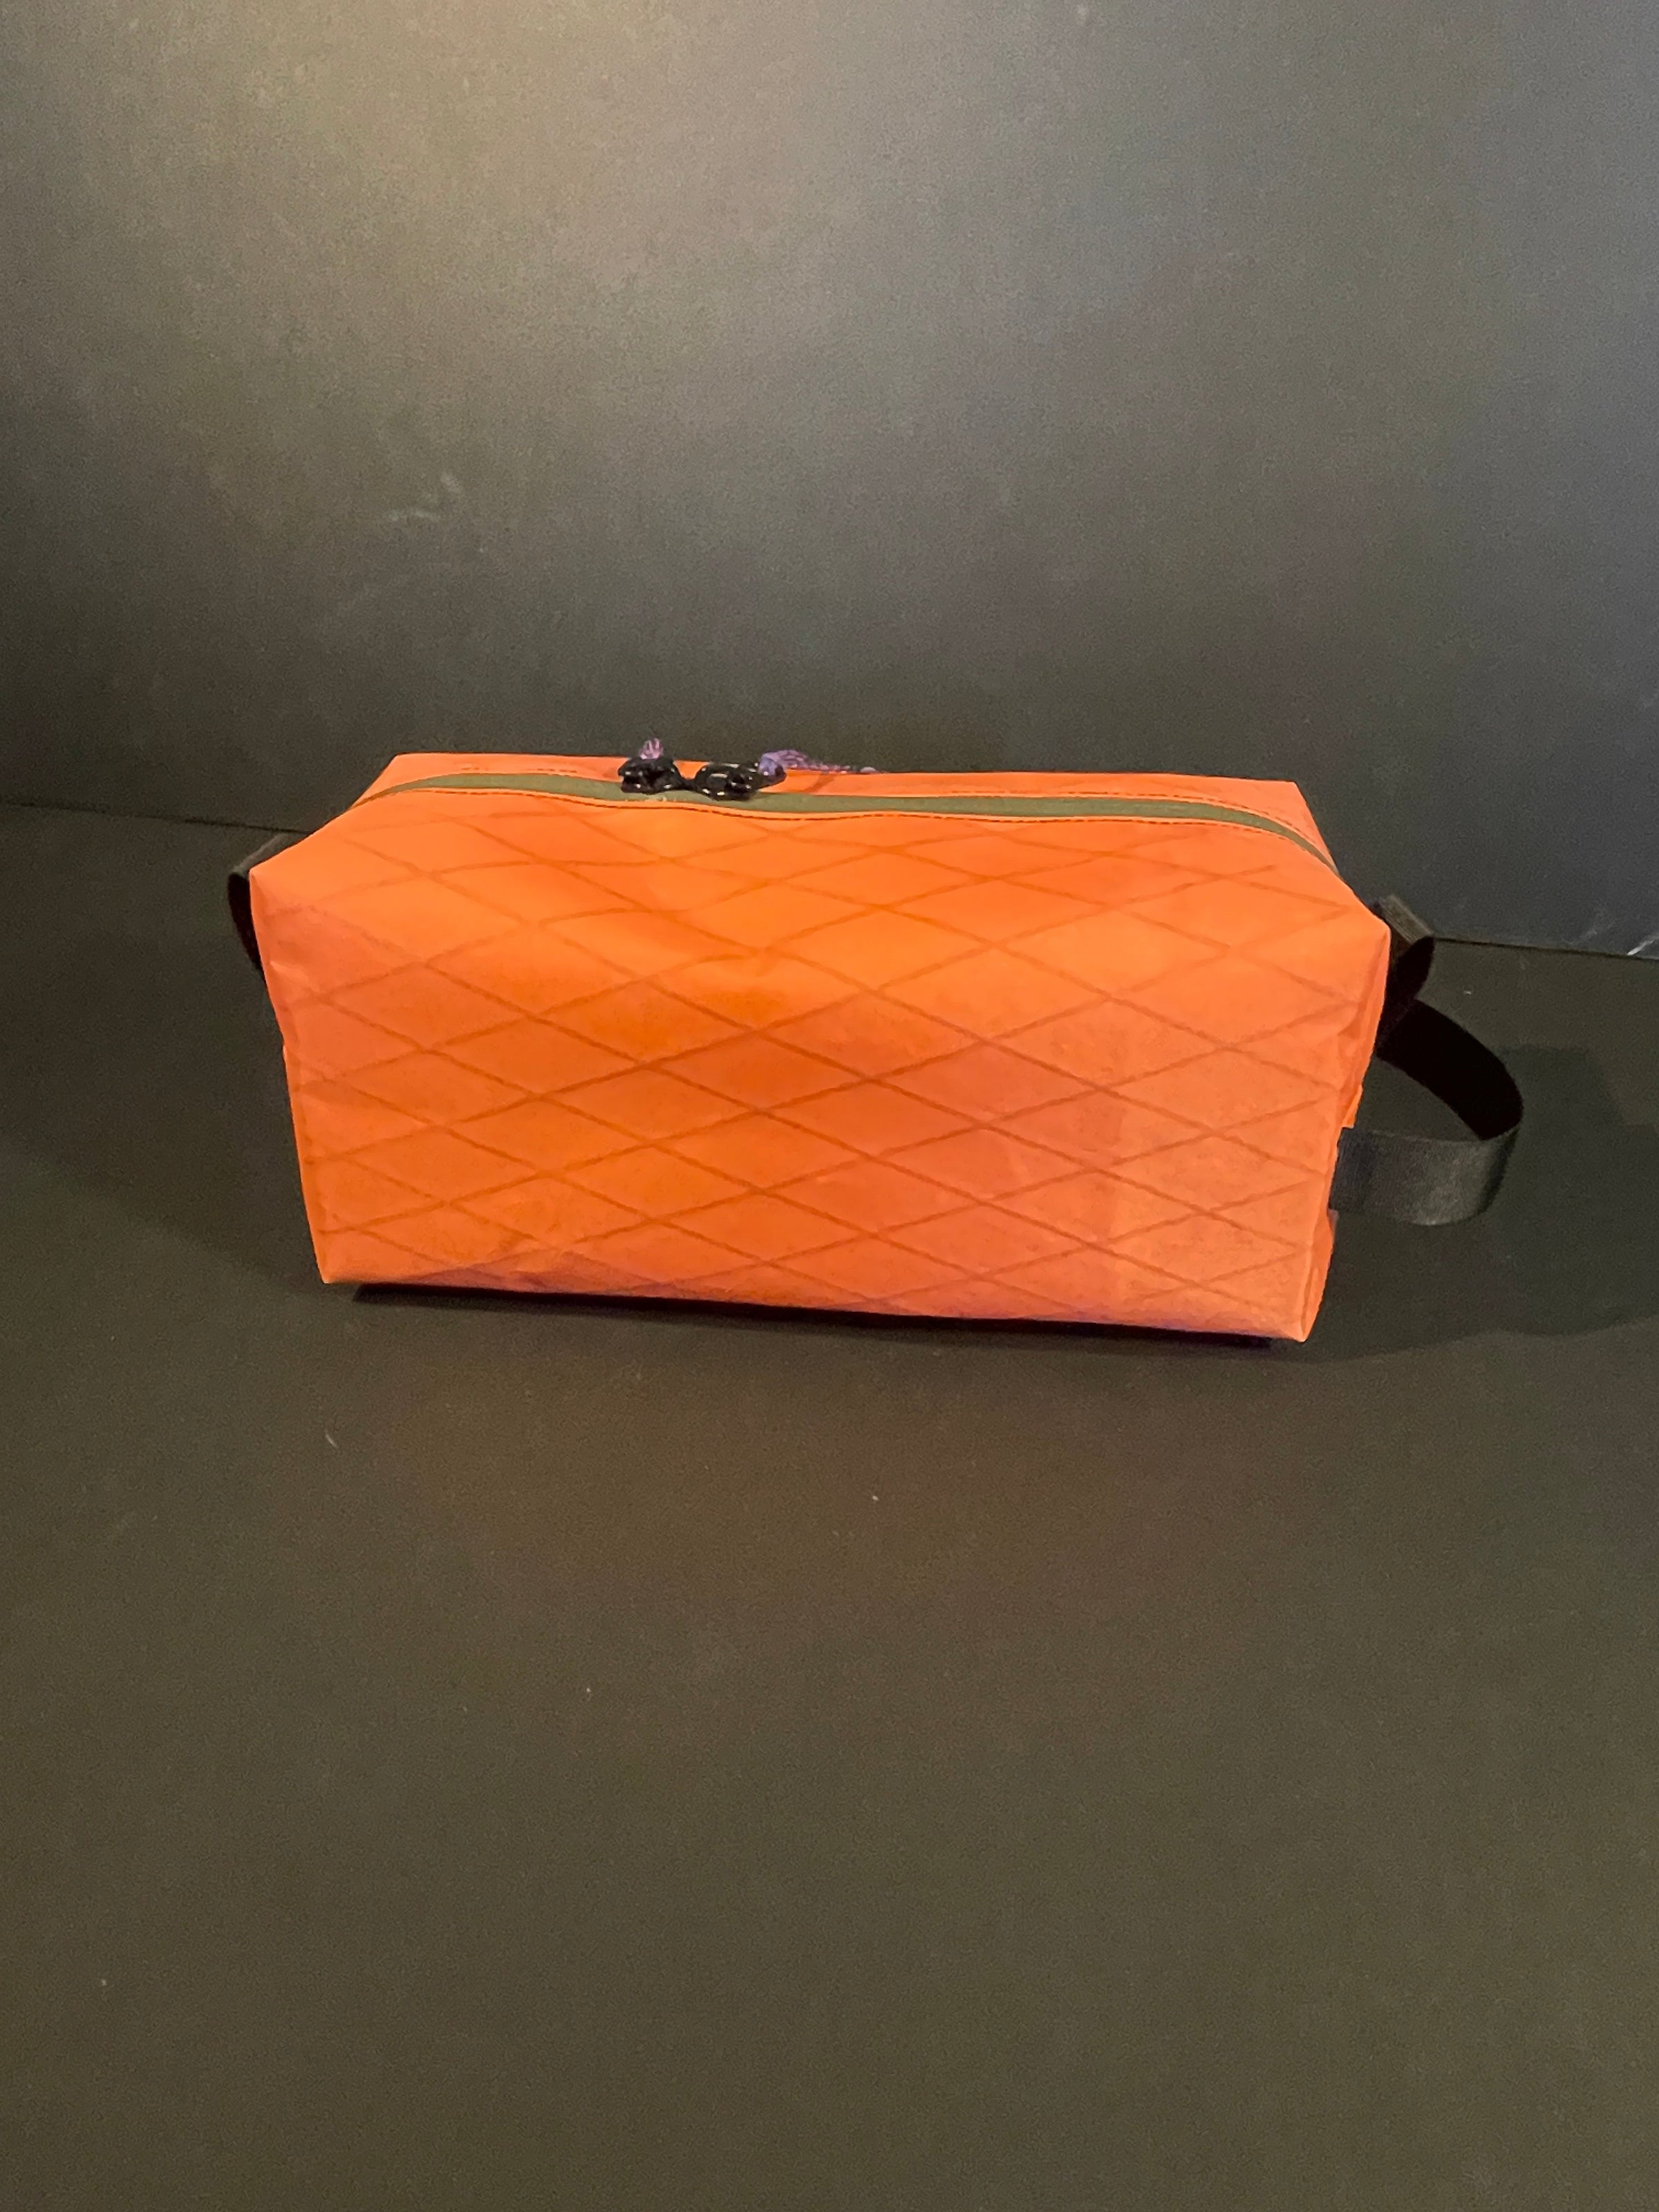 Bottega Veneta - Pouch Belt Bag - Neon - Immaculate